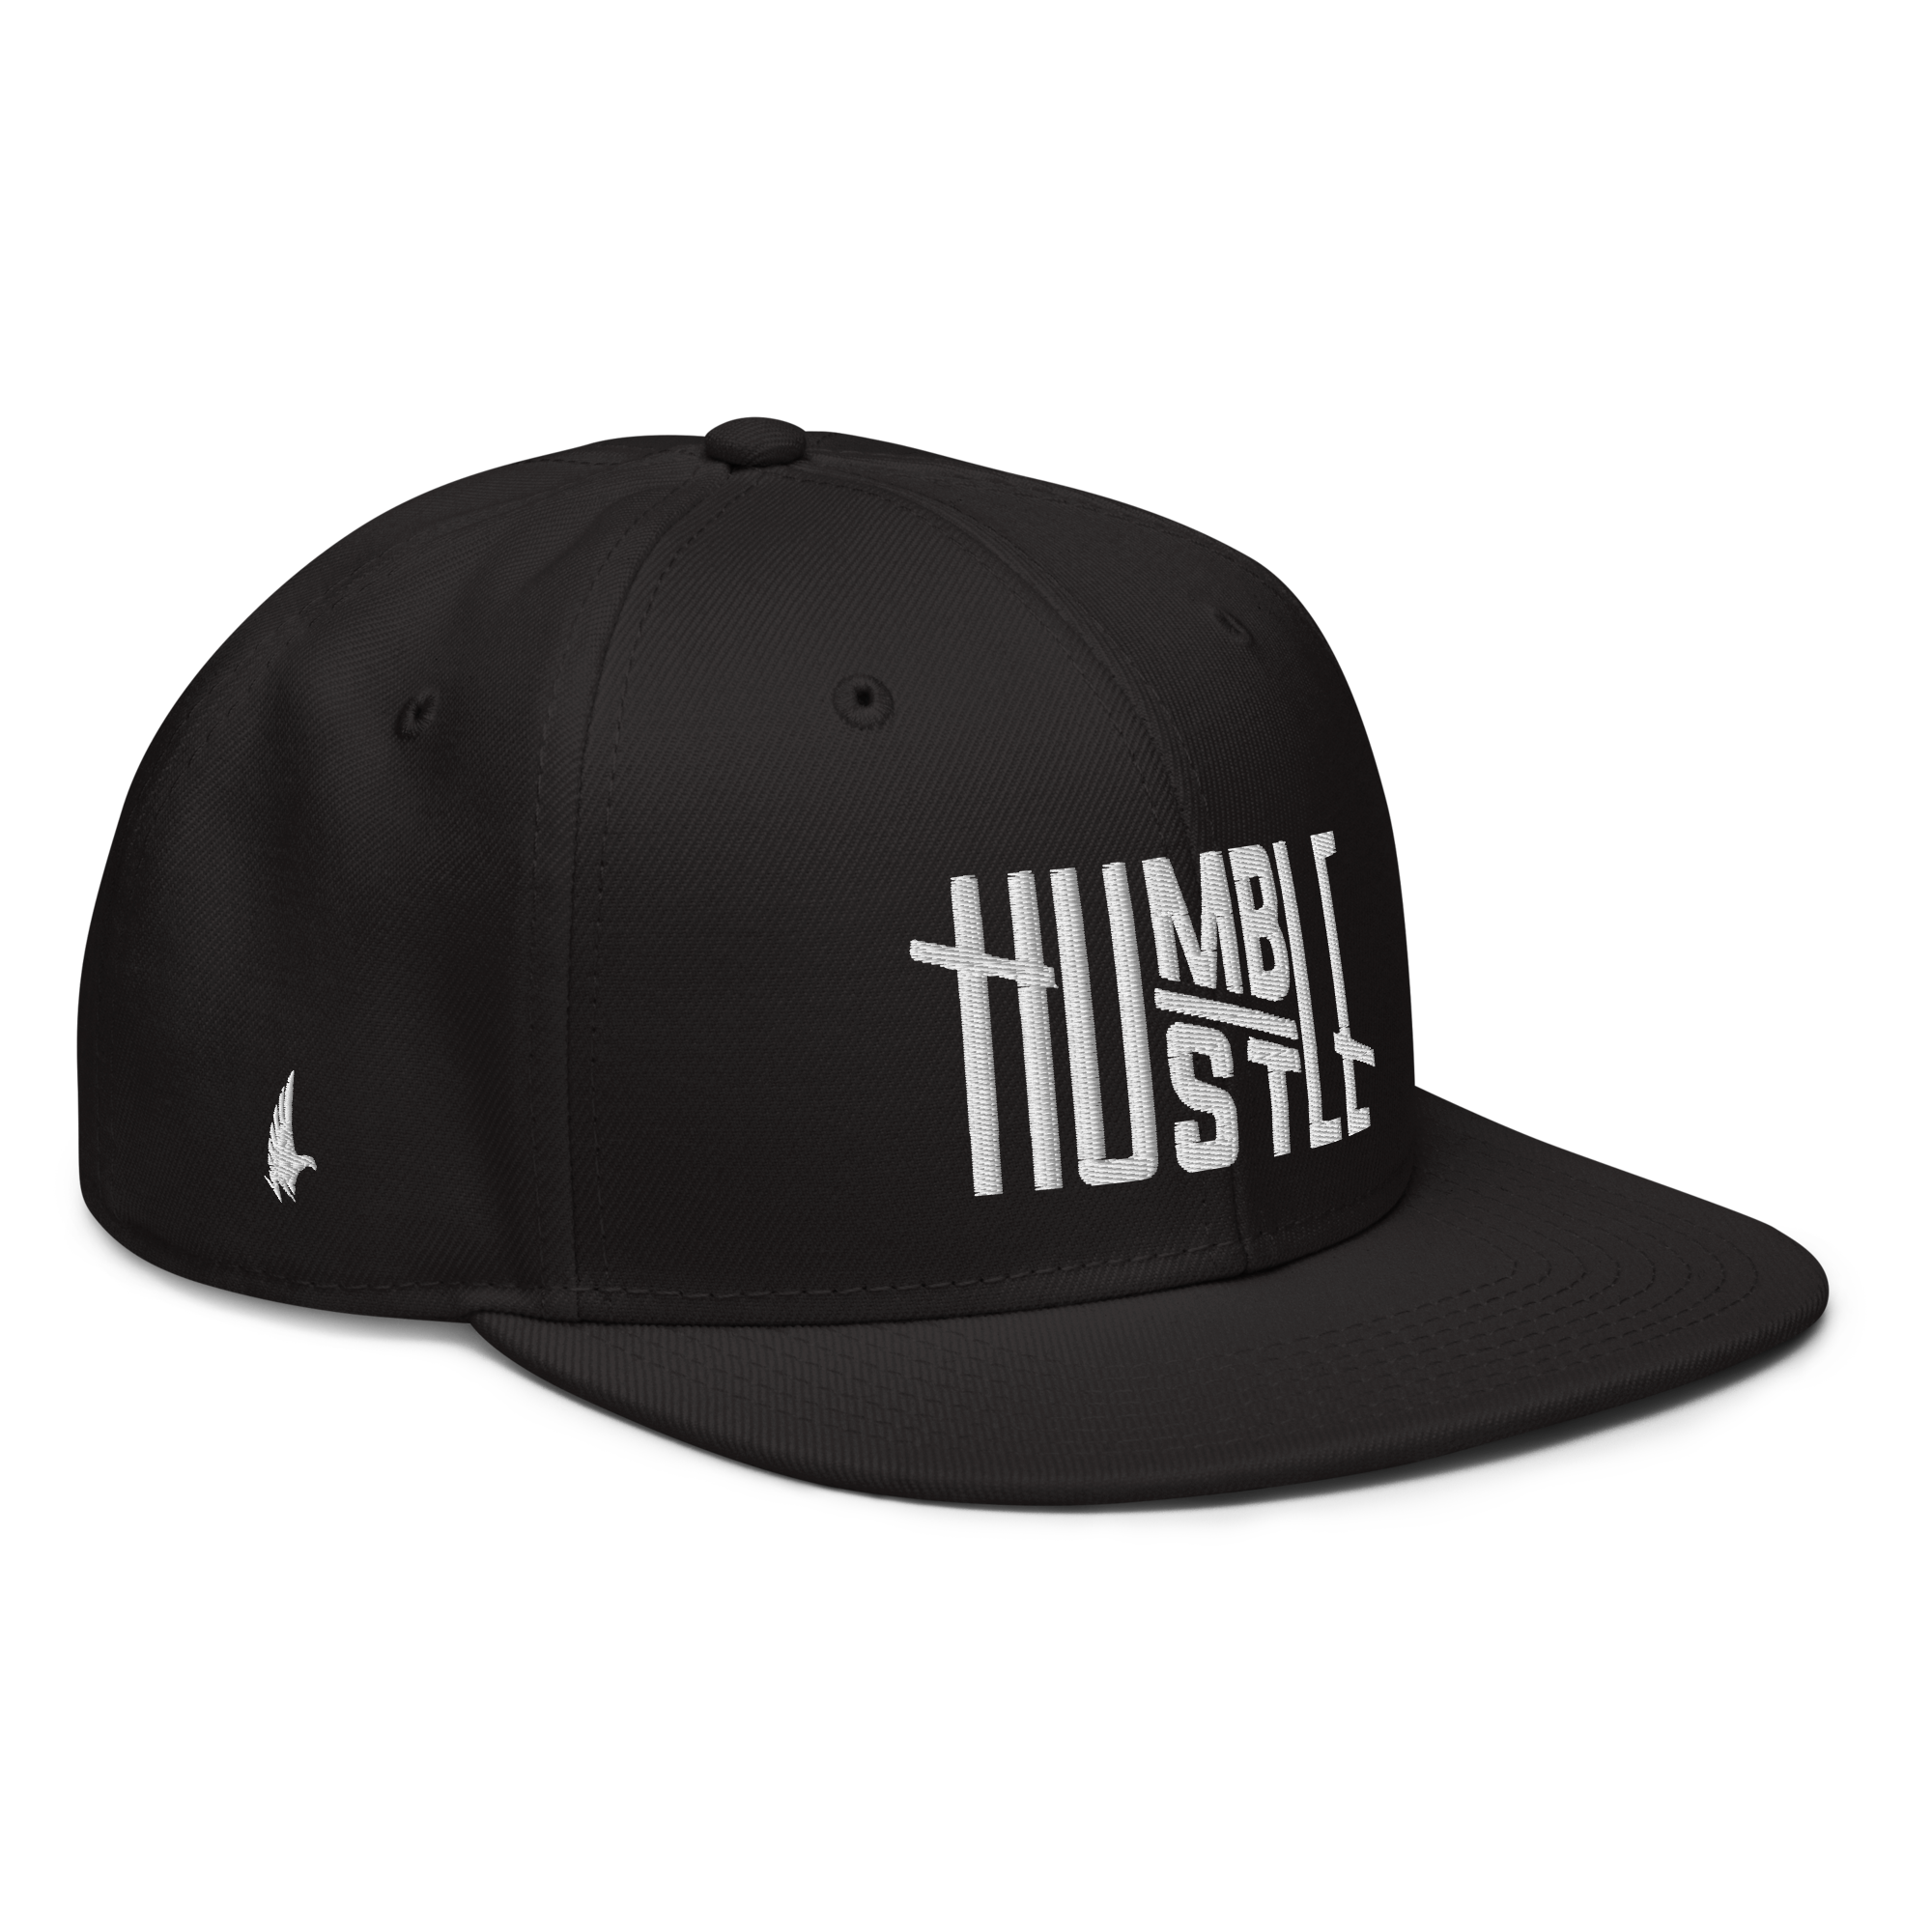 Humble Hustle Snapback Hat - Black/White OS - Loyalty Vibes